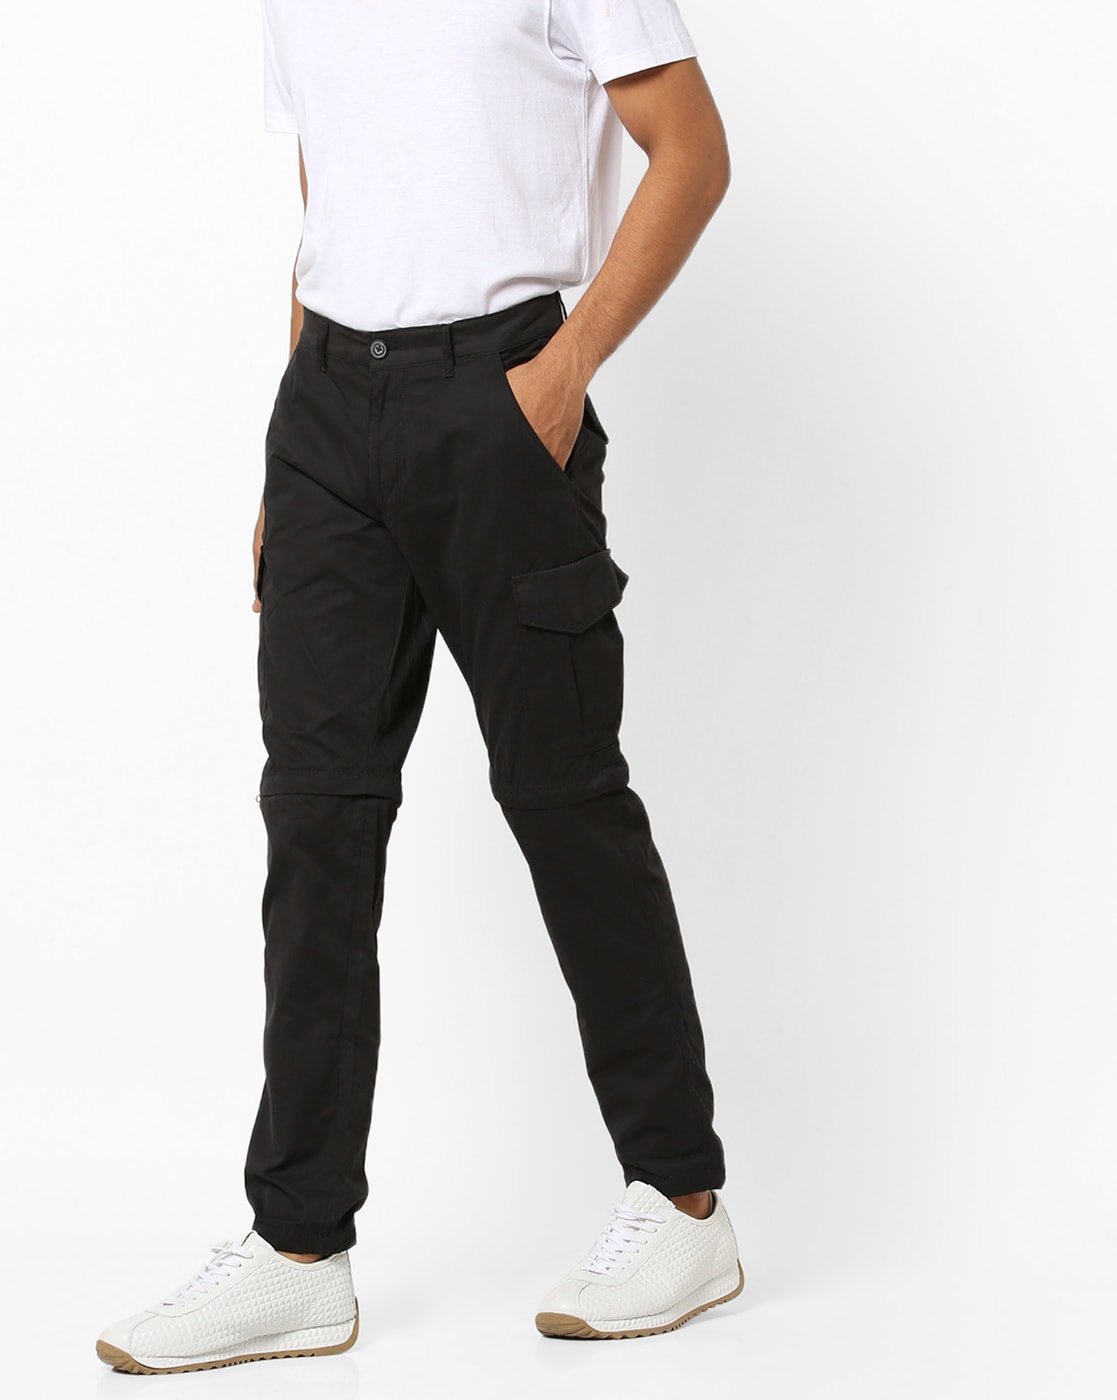 Teamspirit - Cargo Track Pants with Elasticated Drawstring Waist from Ajio  | Pants, Harem pants, Track pants